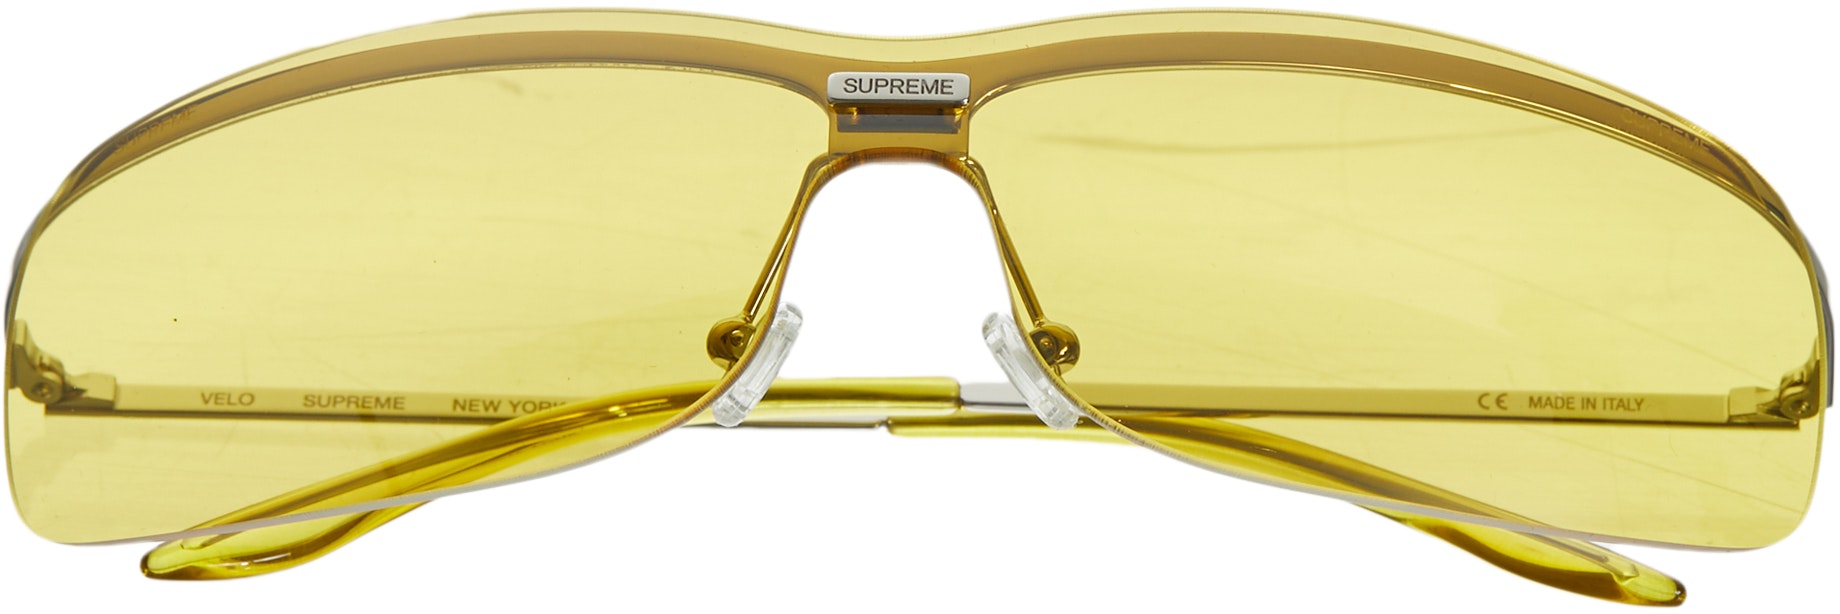 Supreme Velo Sunglasses Lime - Novelship